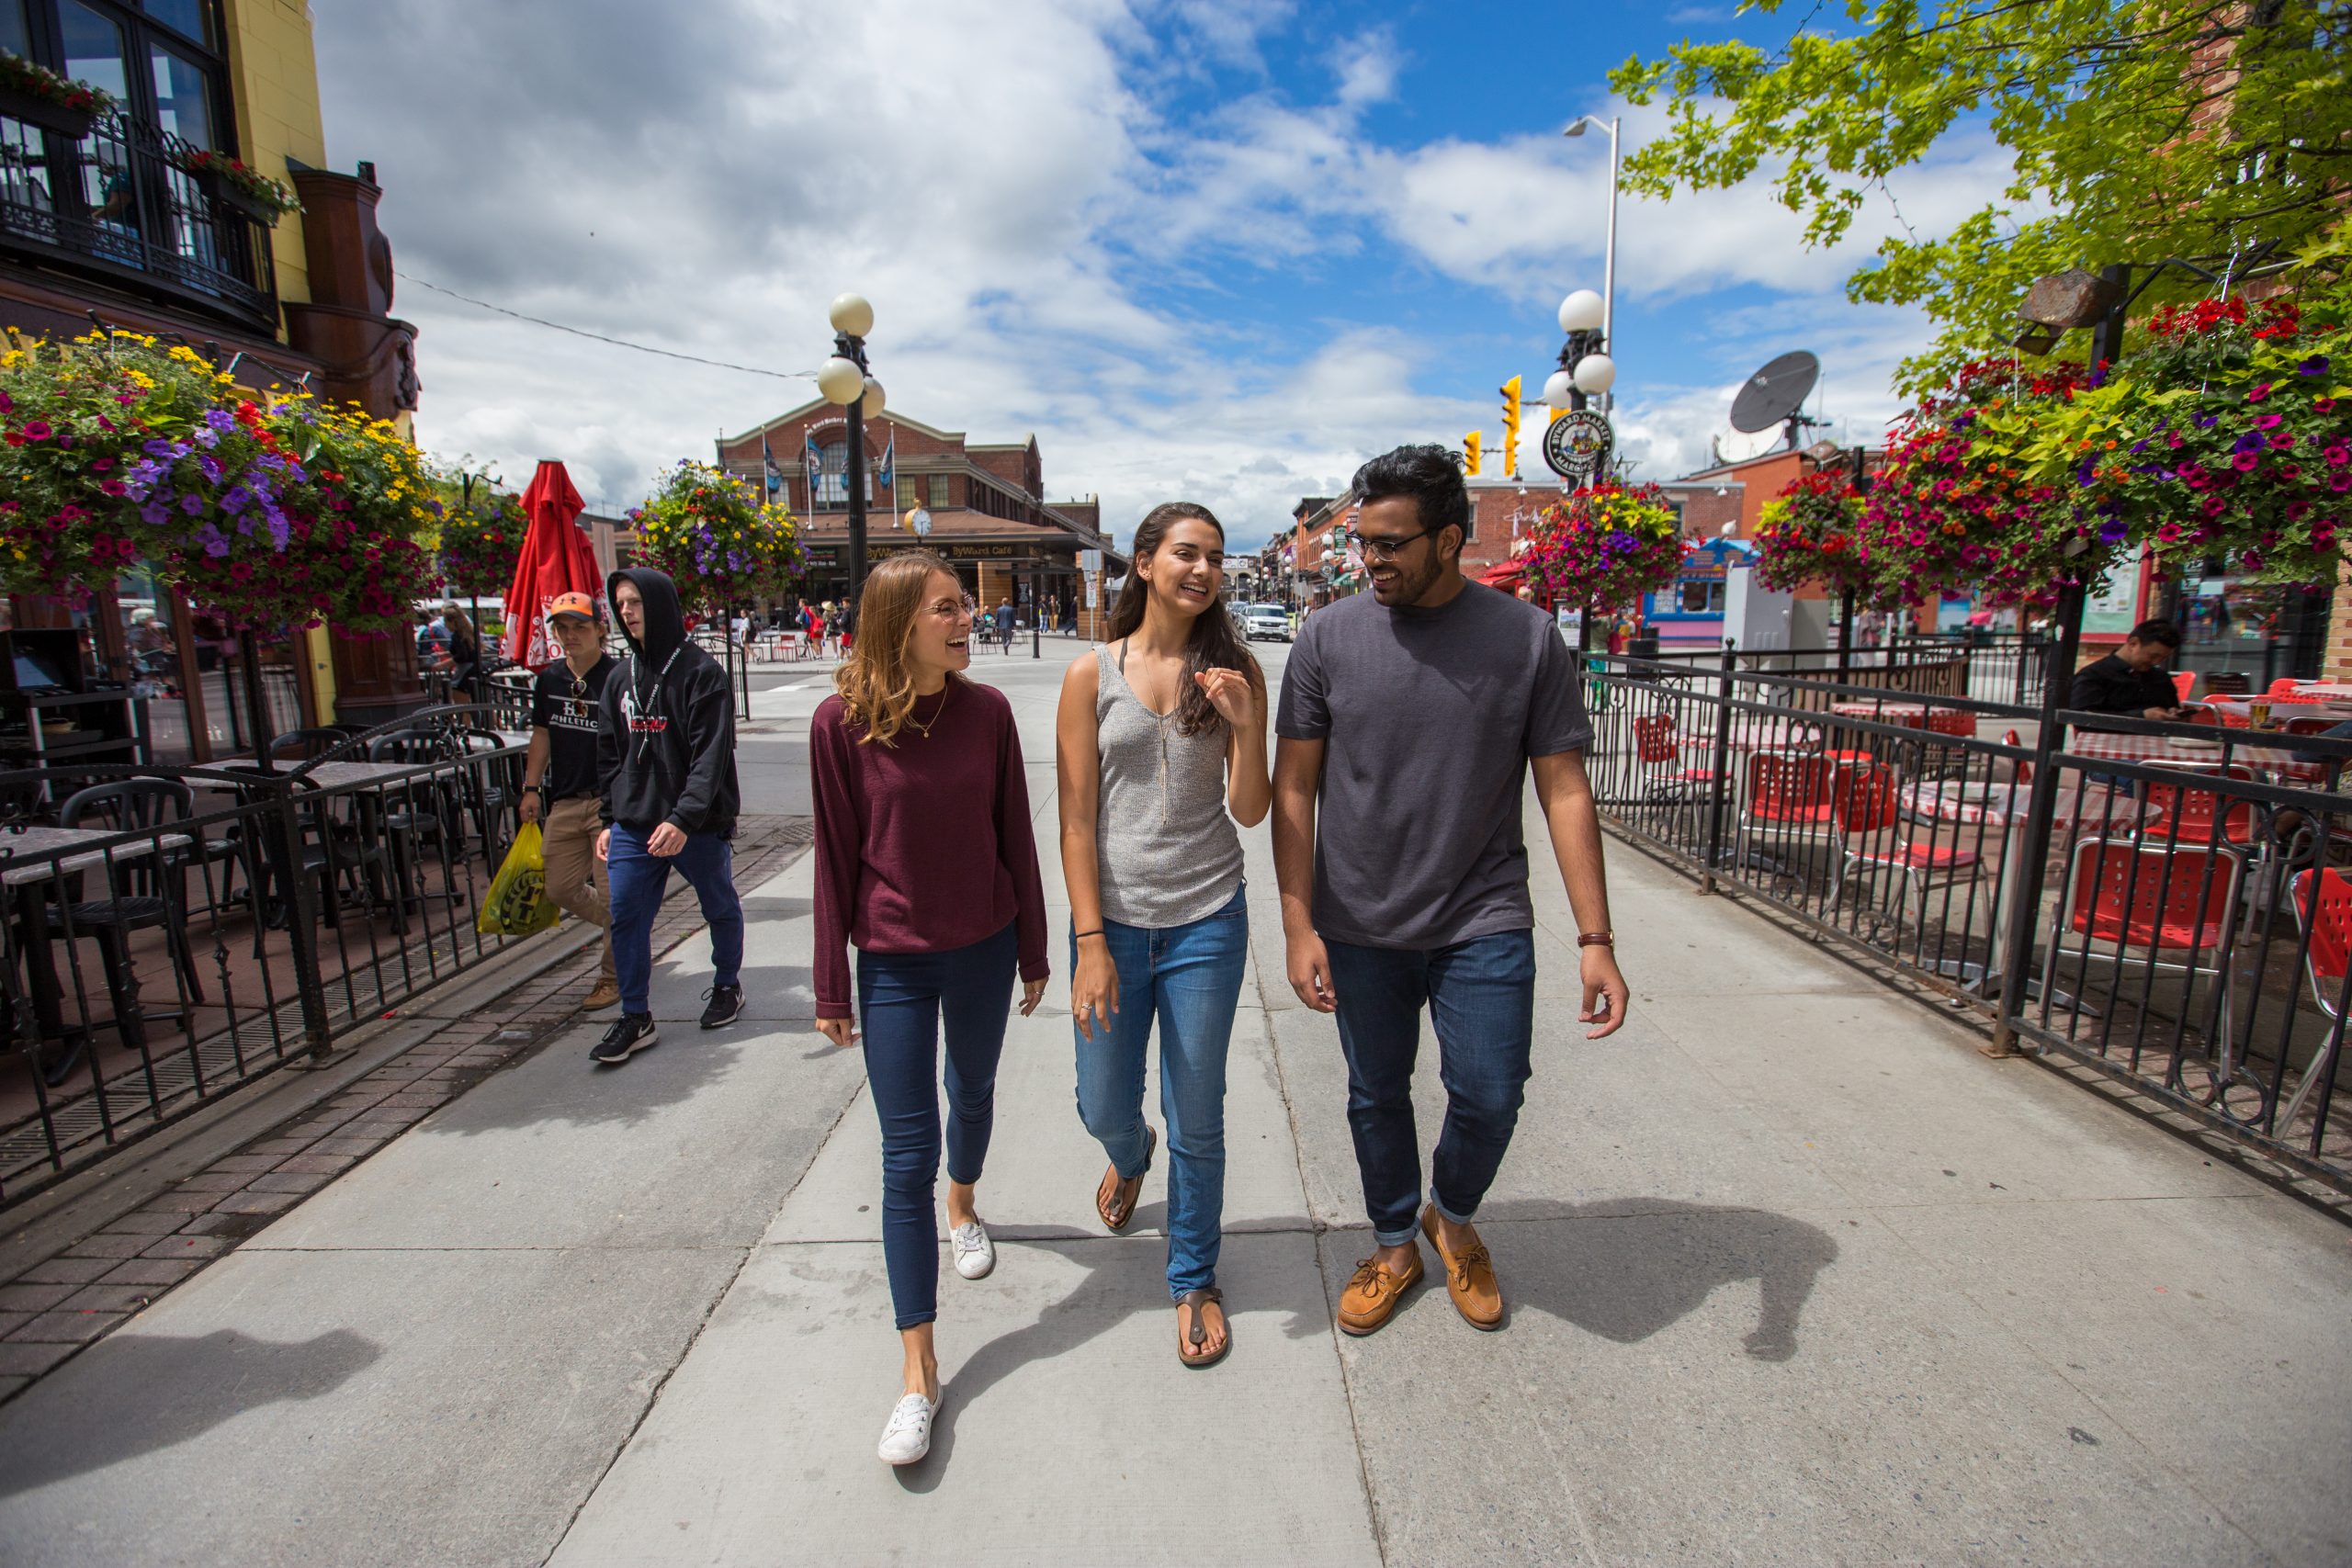 Three students in the market near the University of Ottawa